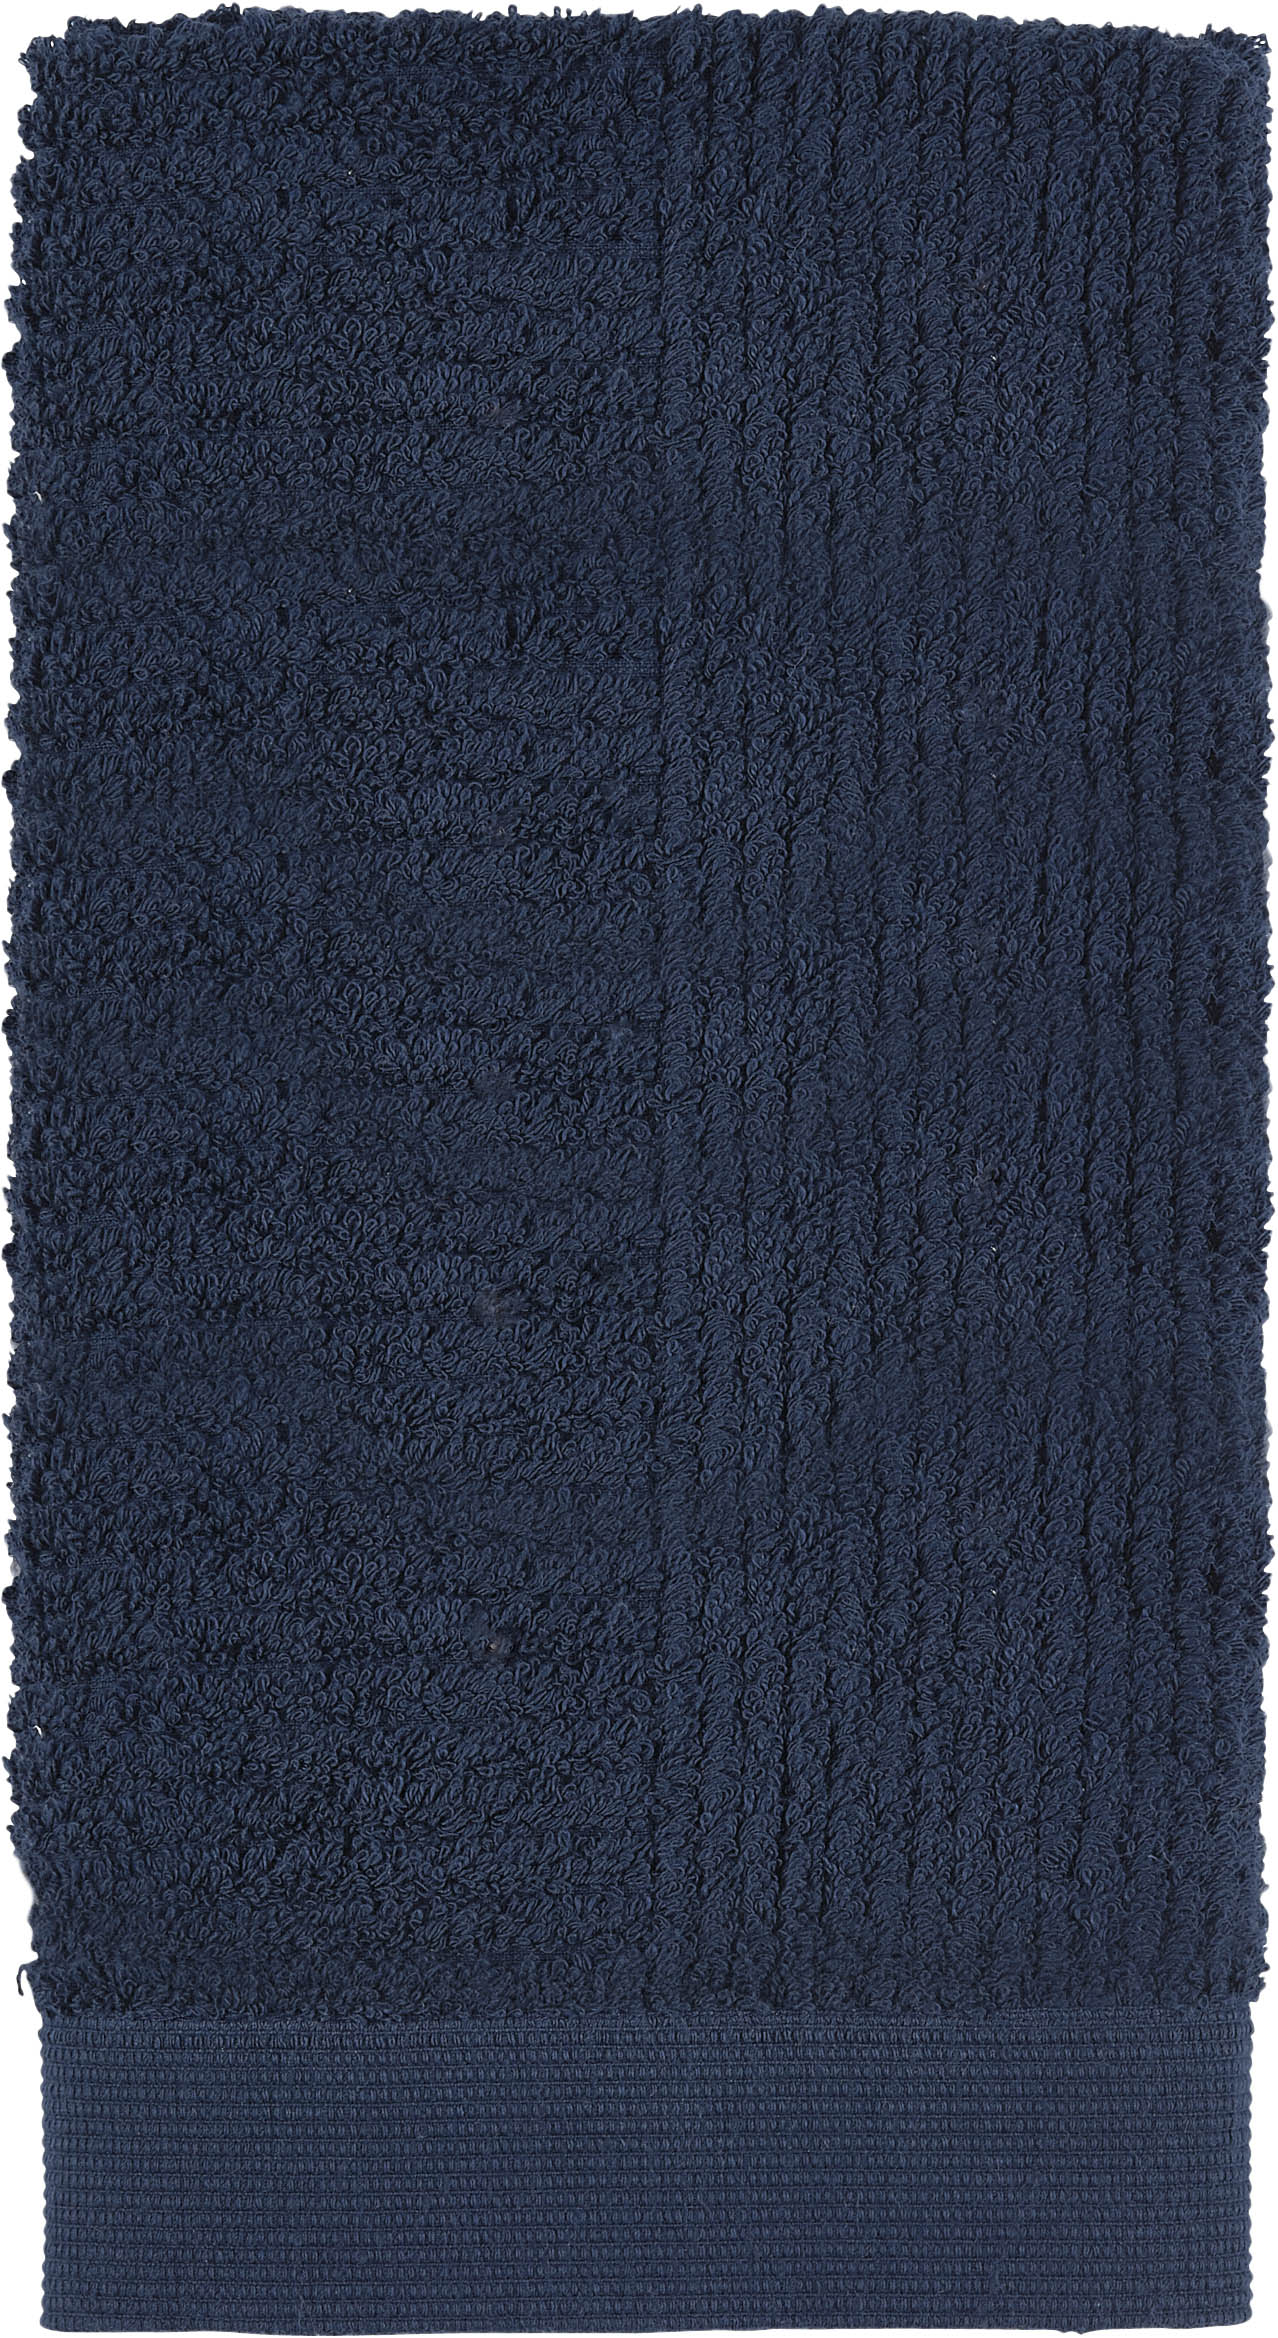 Zone Håndklæde Classic - Dark Blue 50x100 cm